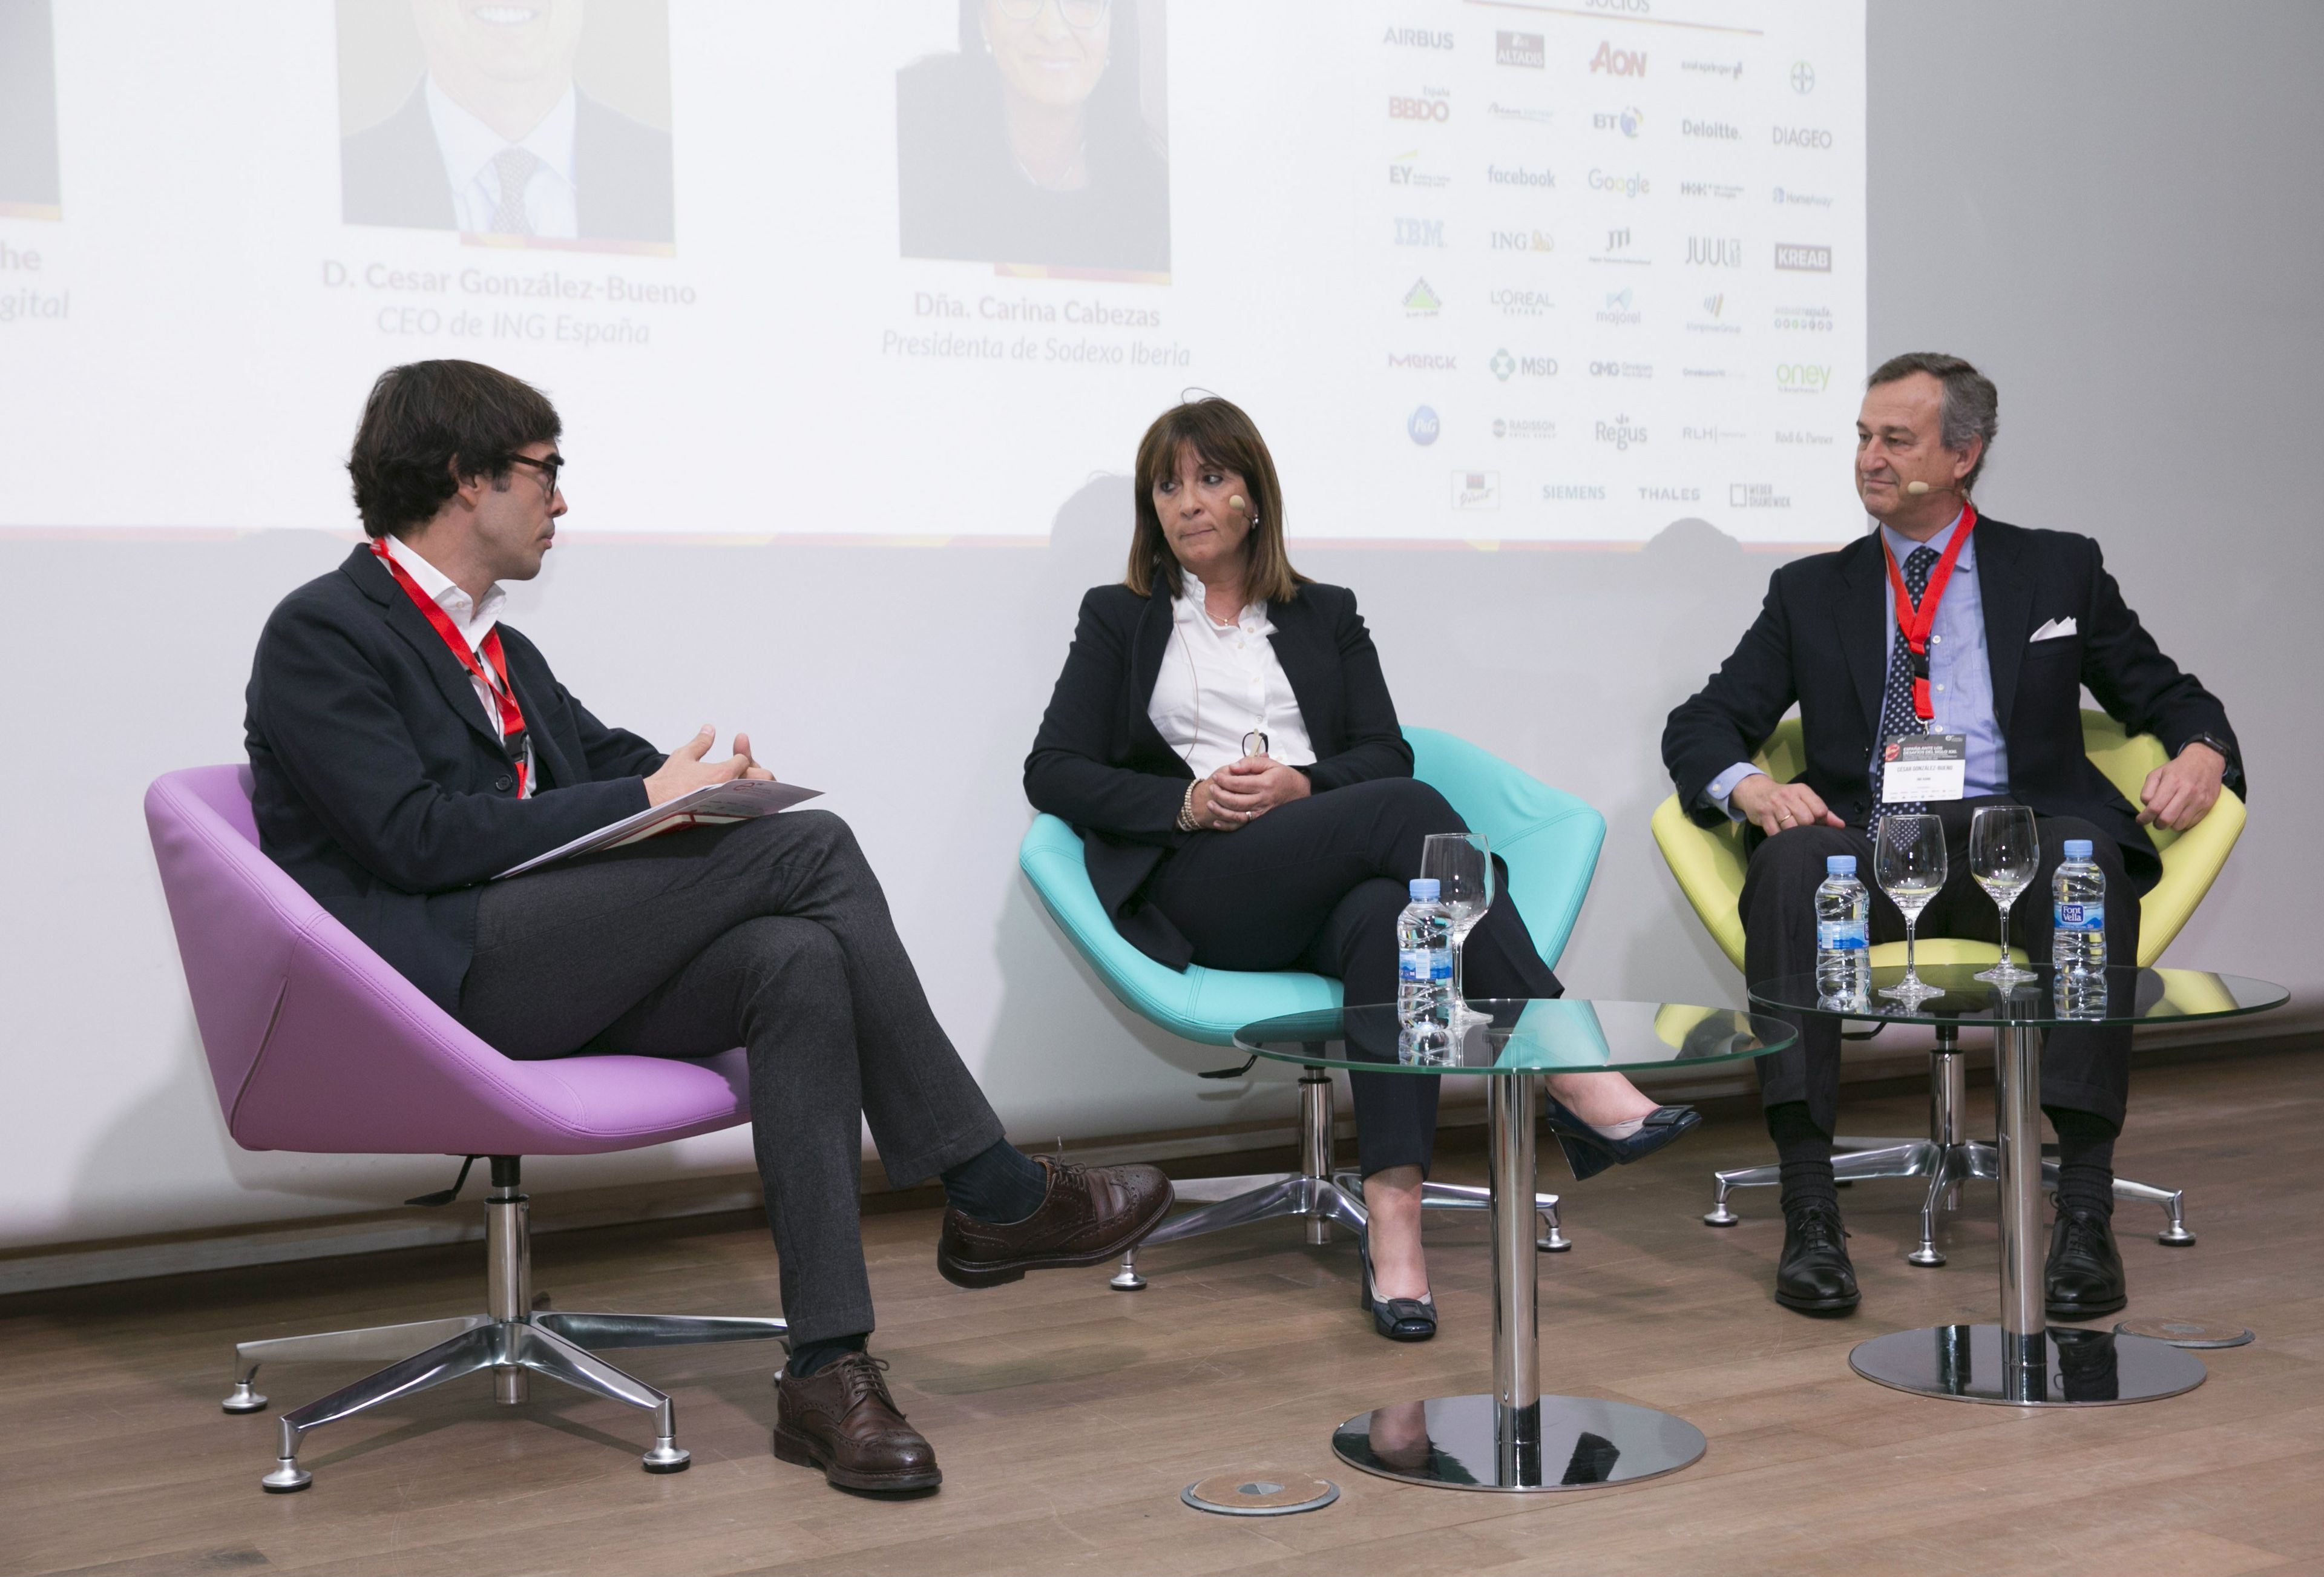 Borja Bergareche, director de Kreab Digital, modera una mesa redonda entre Carina Cabezas, presidenta de Sodexo Iberia, y César González-Bueno, presidenta de Sodexo Iberia.